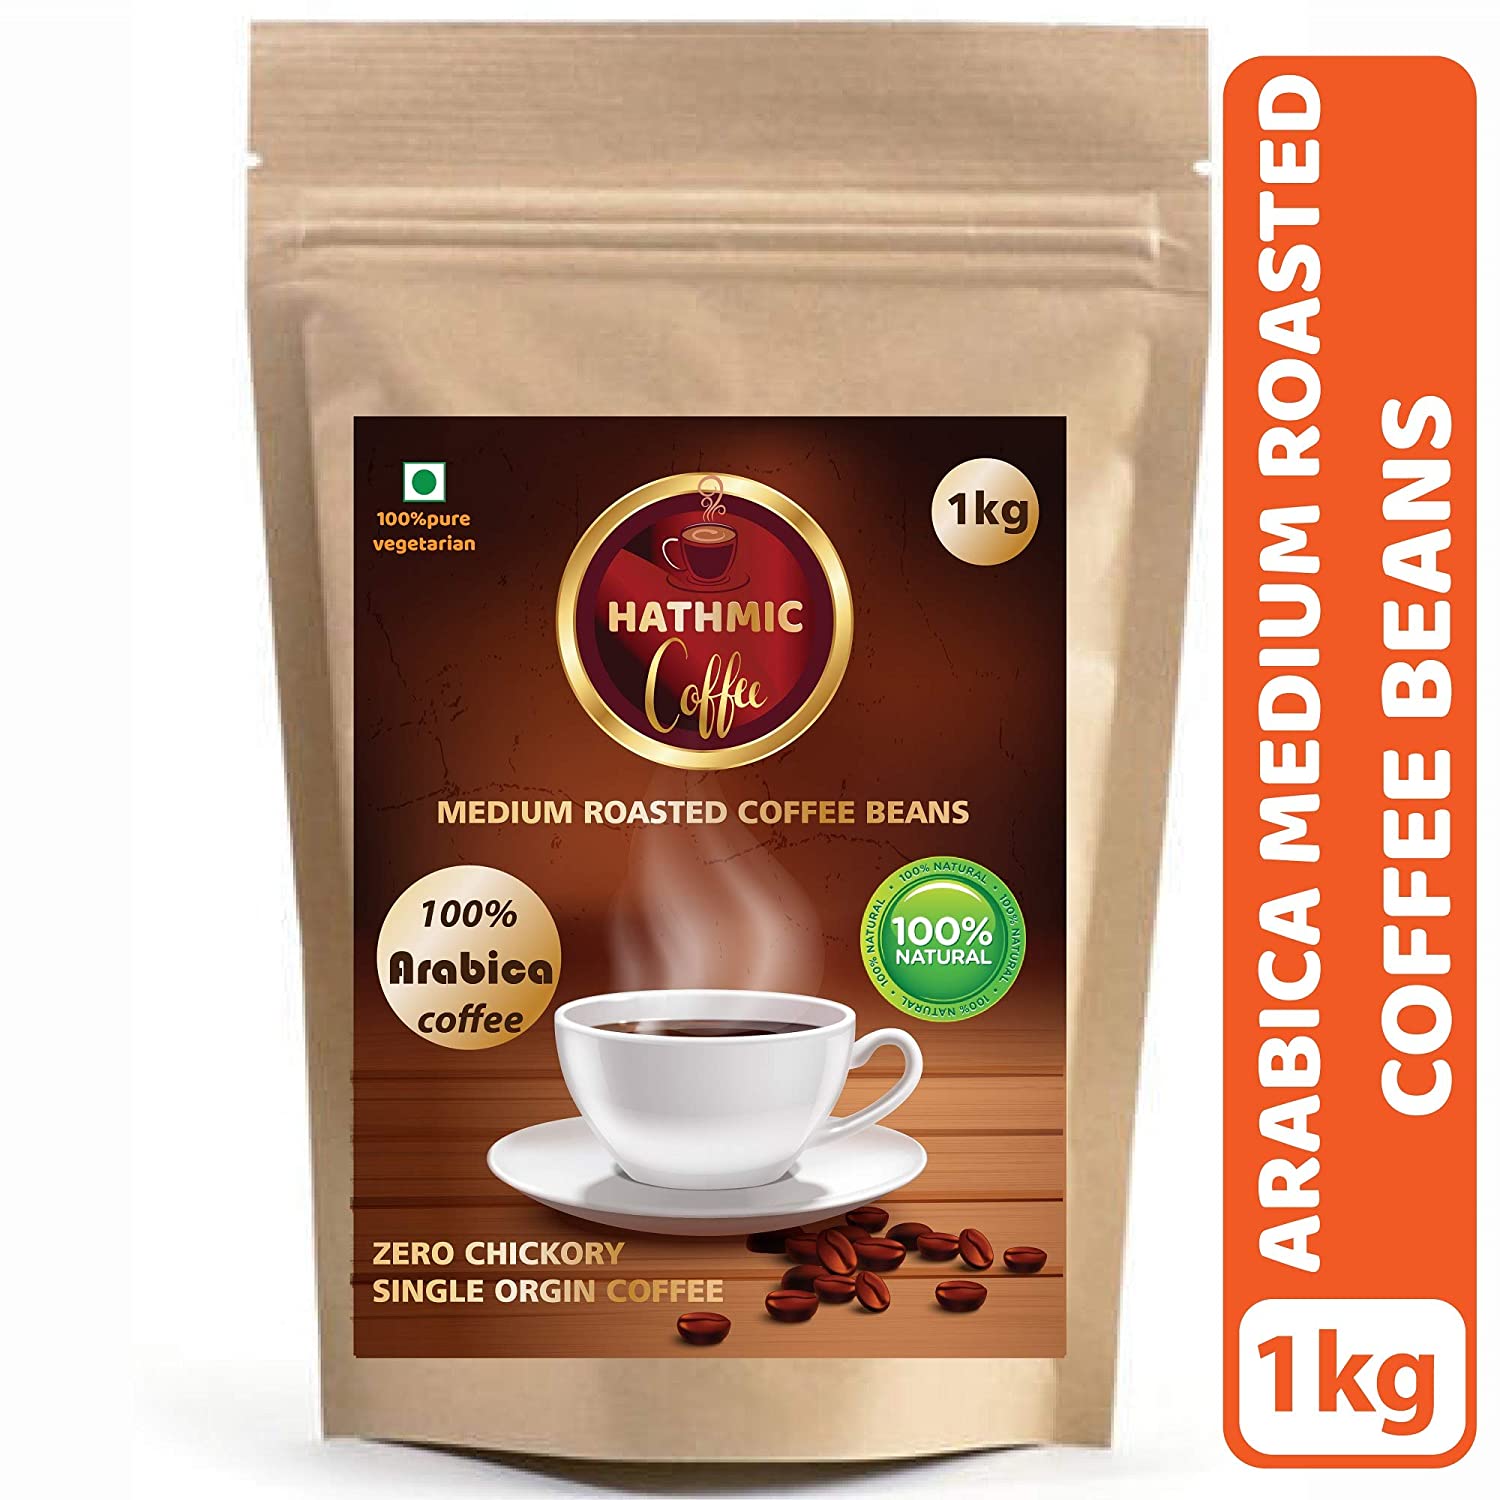 Hathmic 100% Arabica Coffee Image